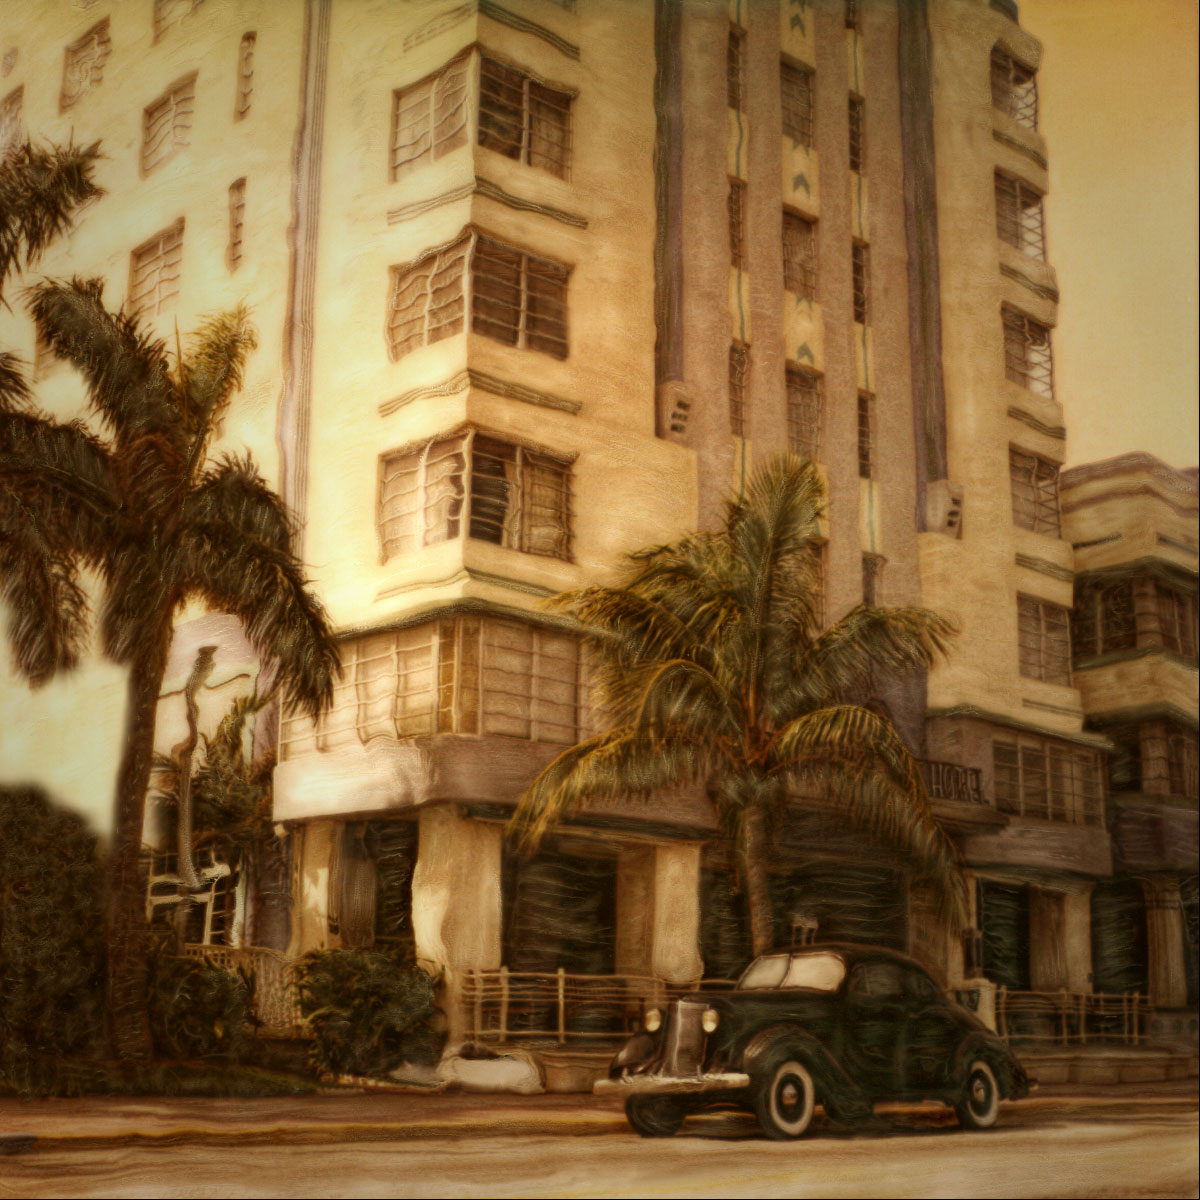 "Park Central Hotel" <br>Art Deco Hotel with Palms and 1935 Nash Auto, Miami Beach, FL